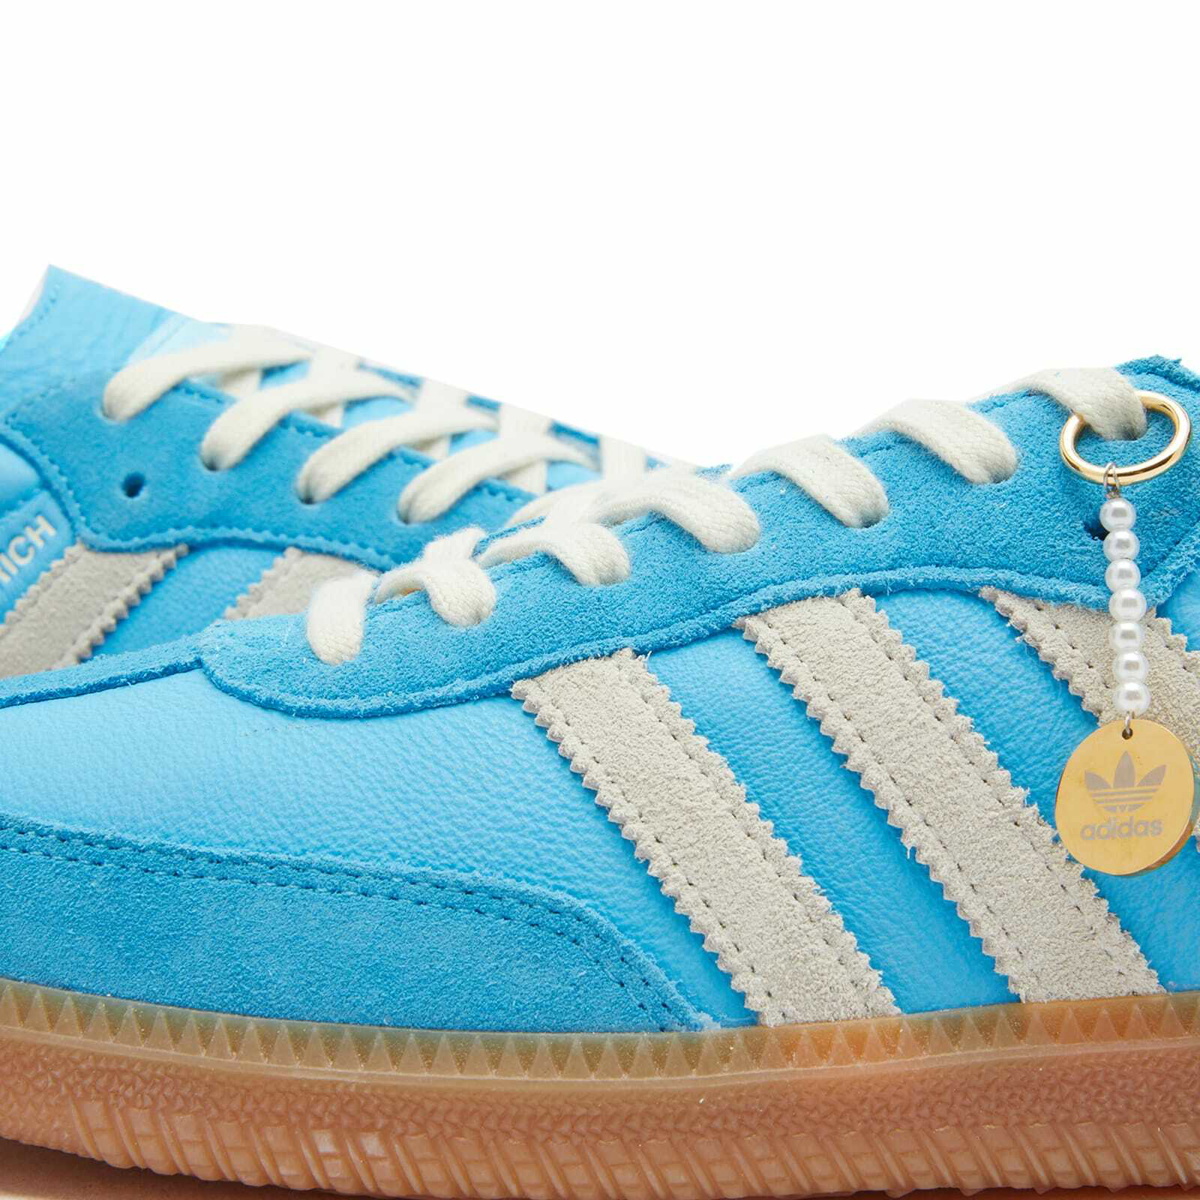 Adidas x Sporty & Rich Samba OG Sneakers in Blue Rush/Cream White adidas